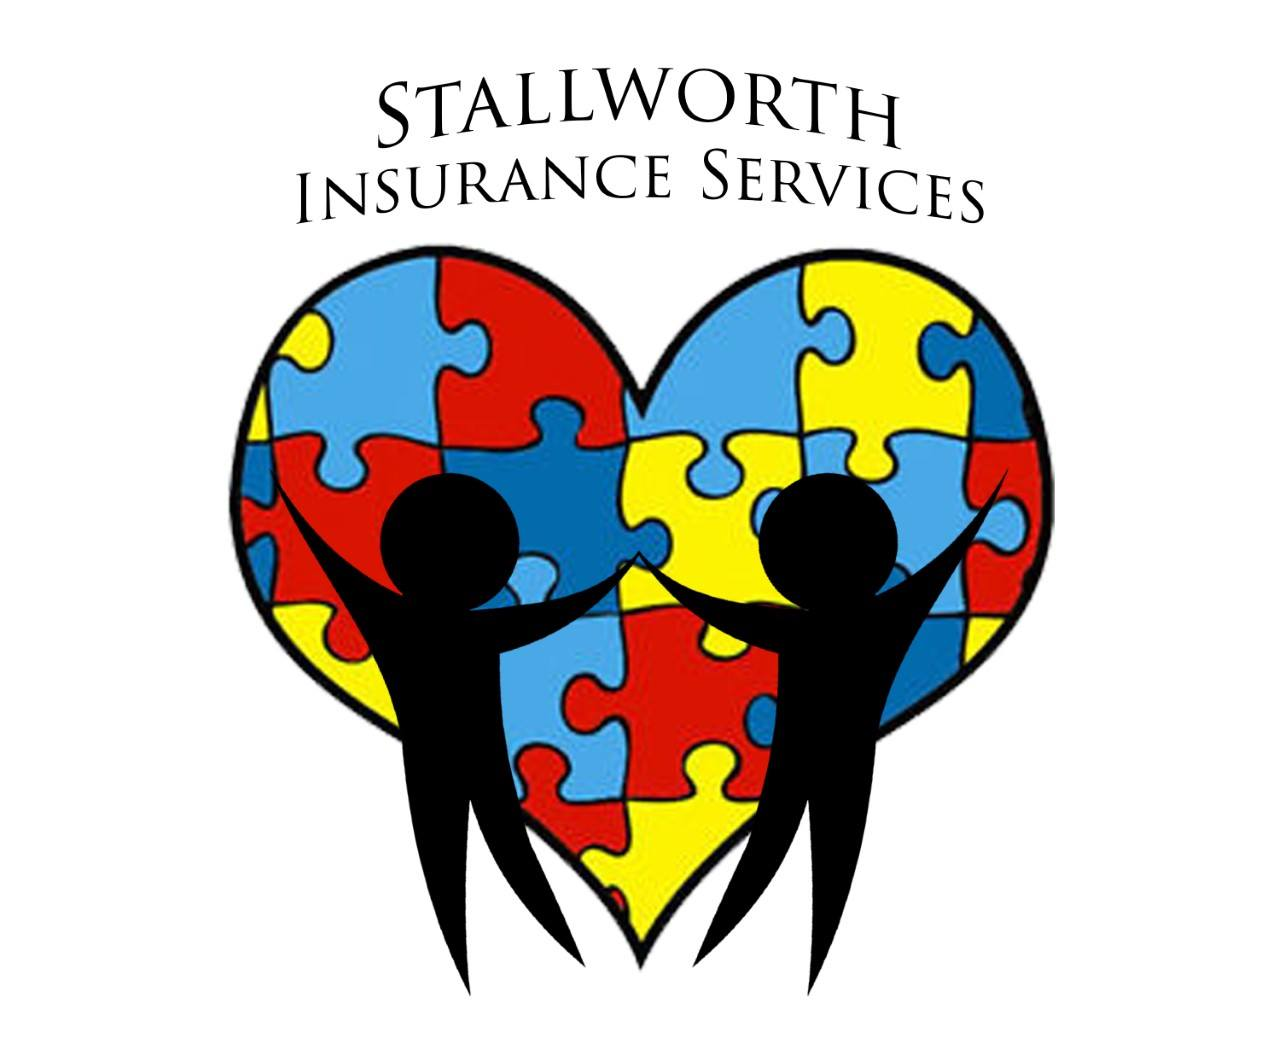 Stallworth Insurance Services